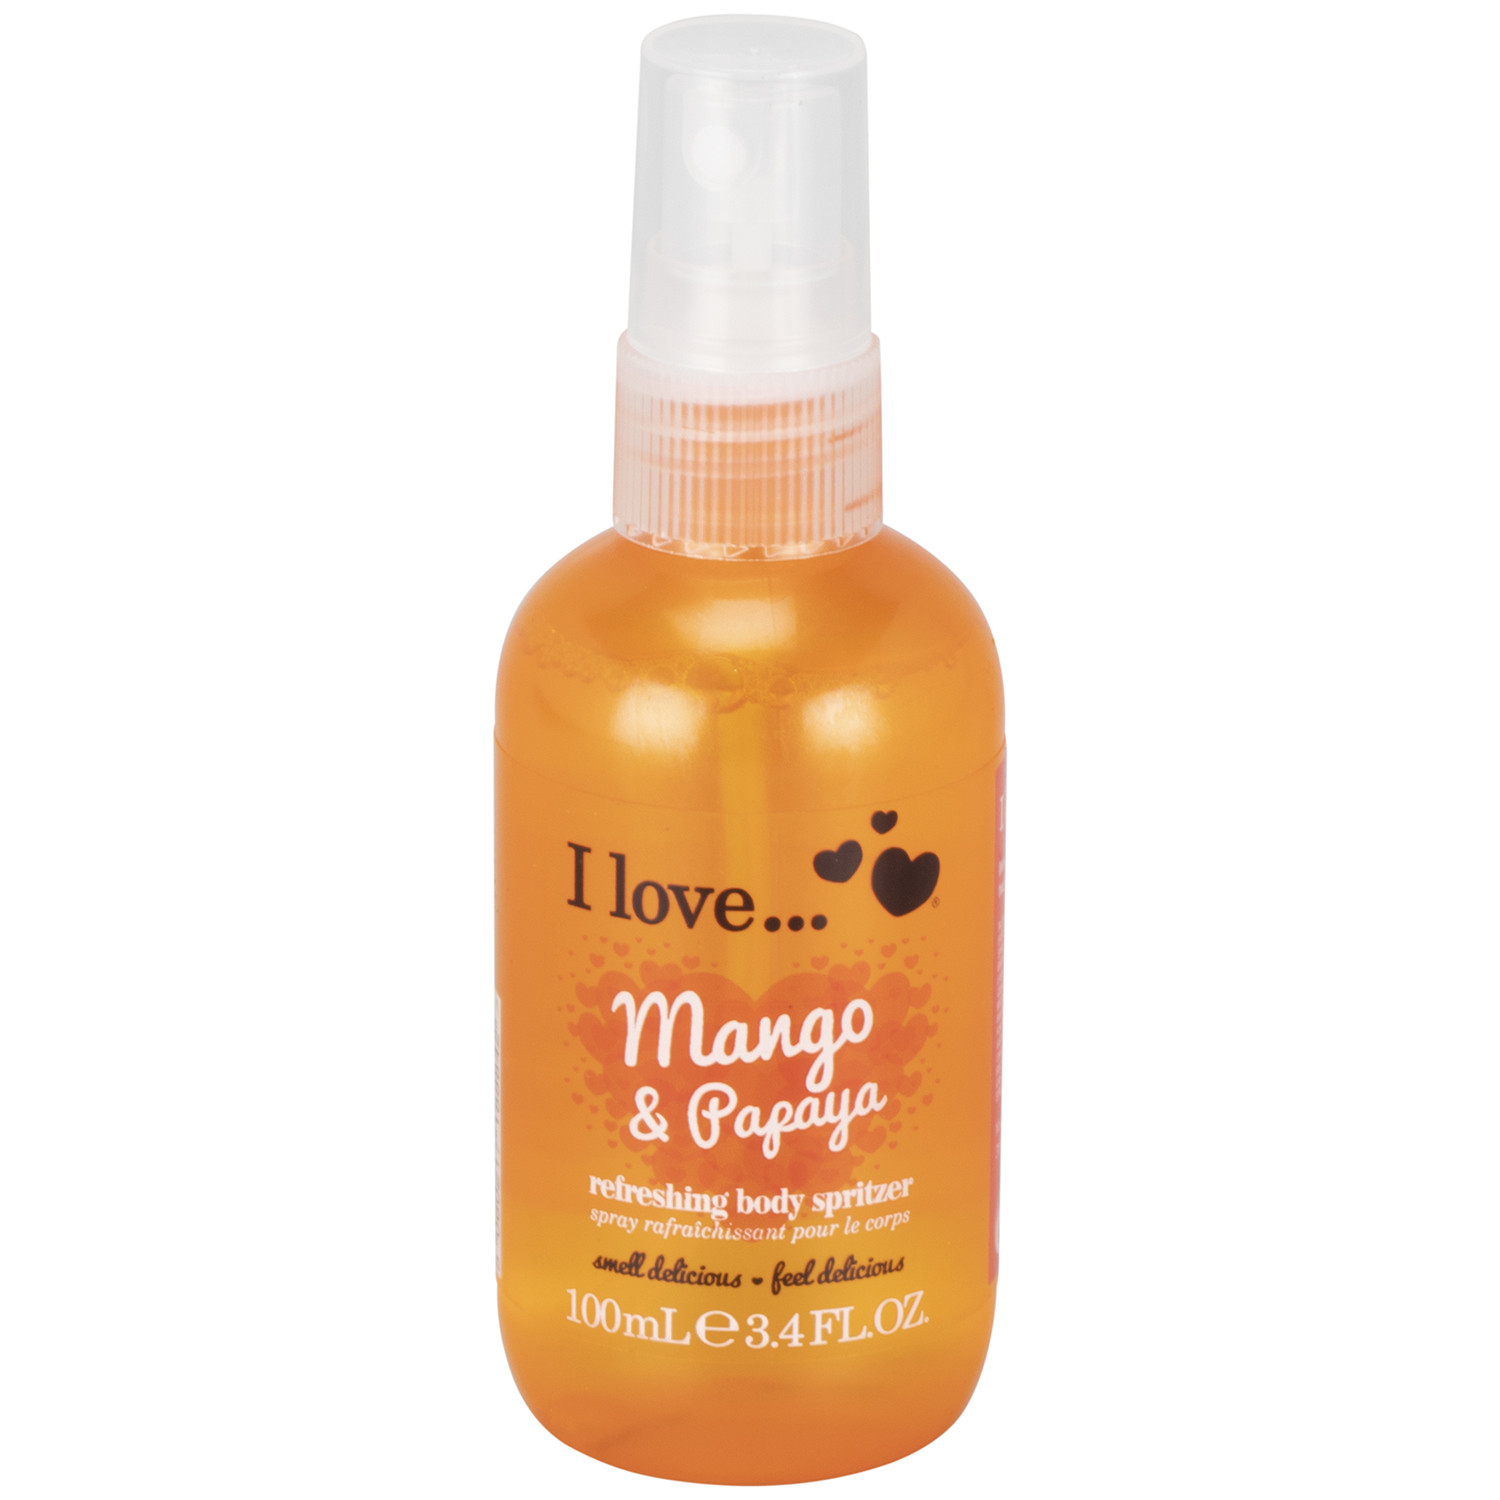 I Love Refreshing Body Spritzer 100ml - Mango and Papaya Image